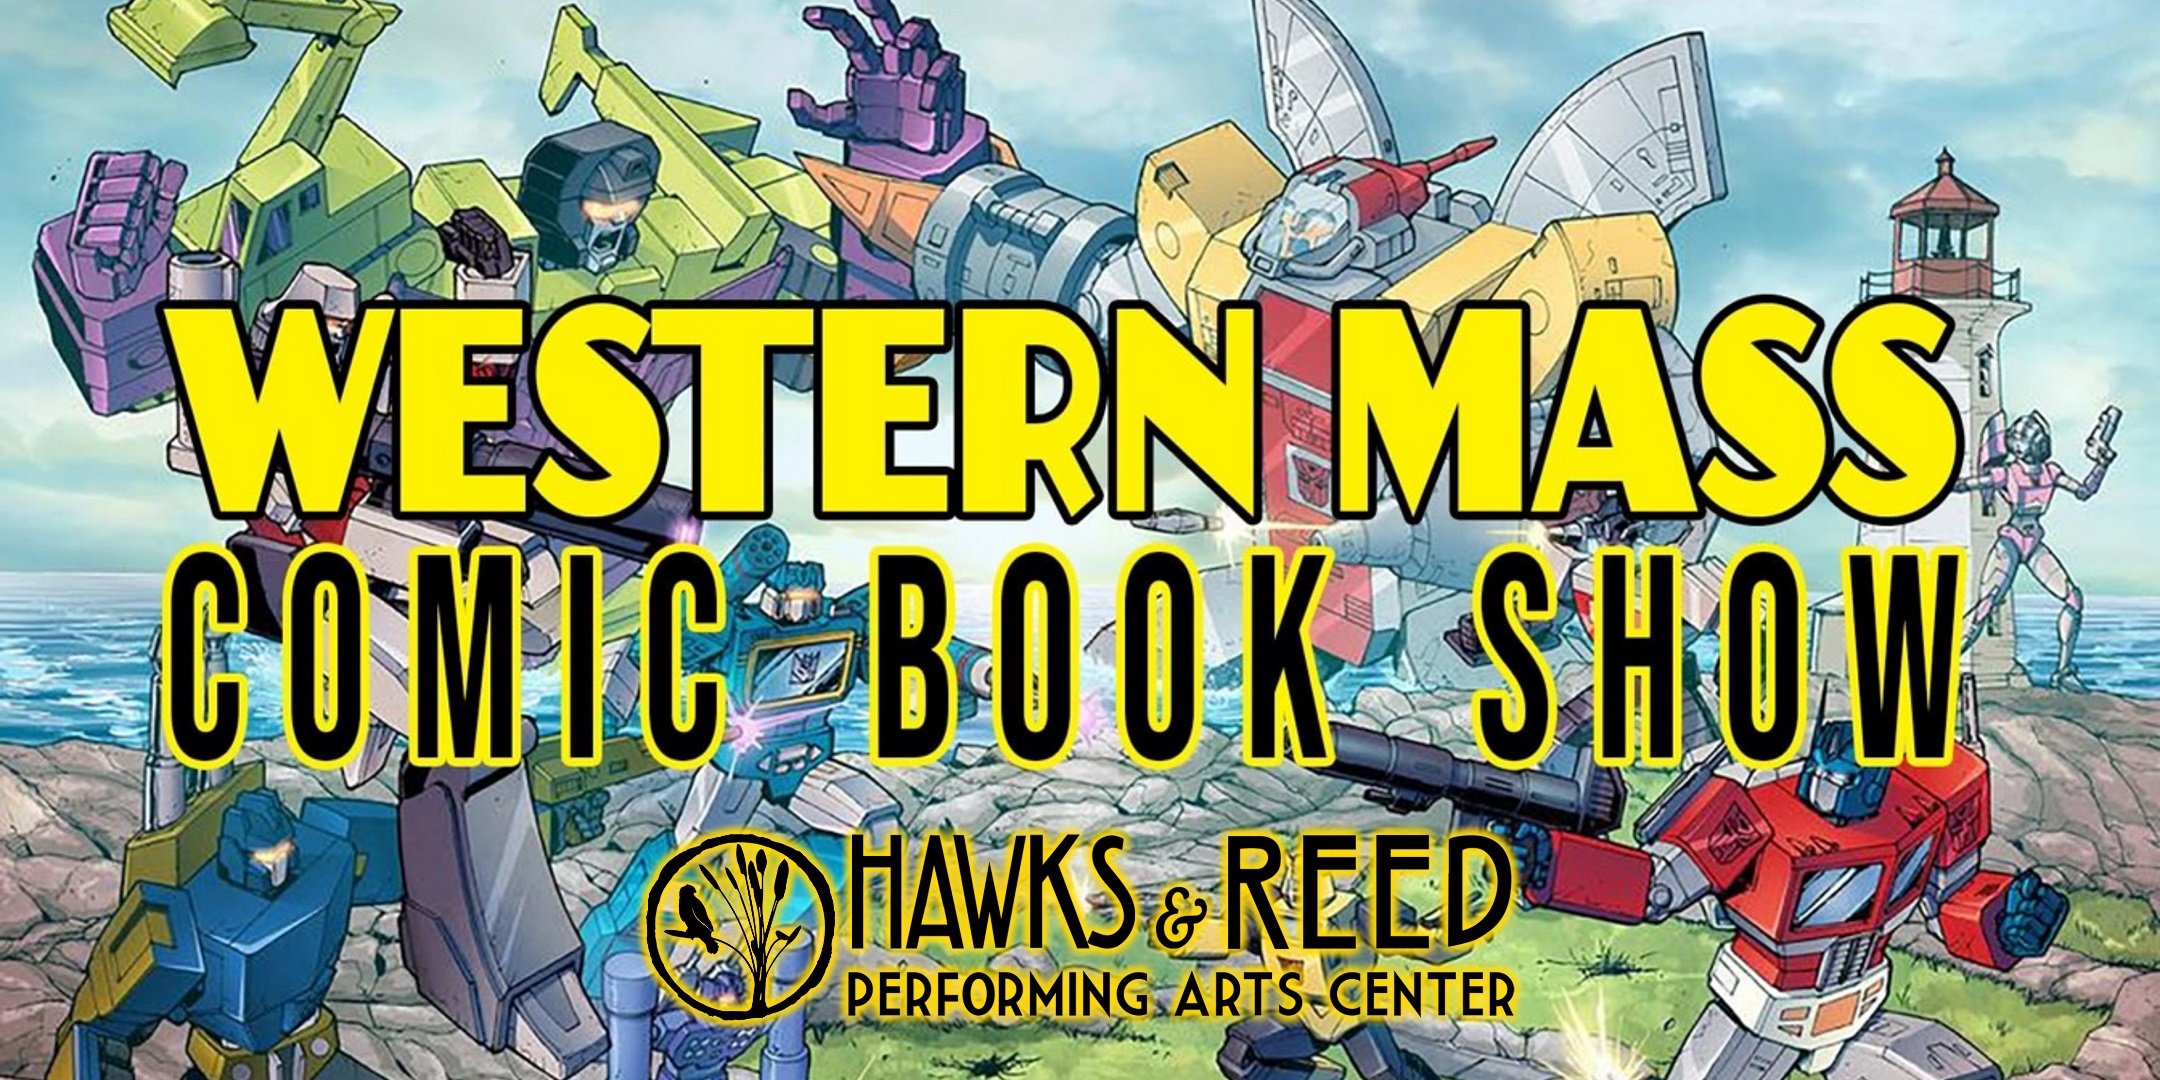 Western Massachusetts Comic Book Show at Hawks & Reed